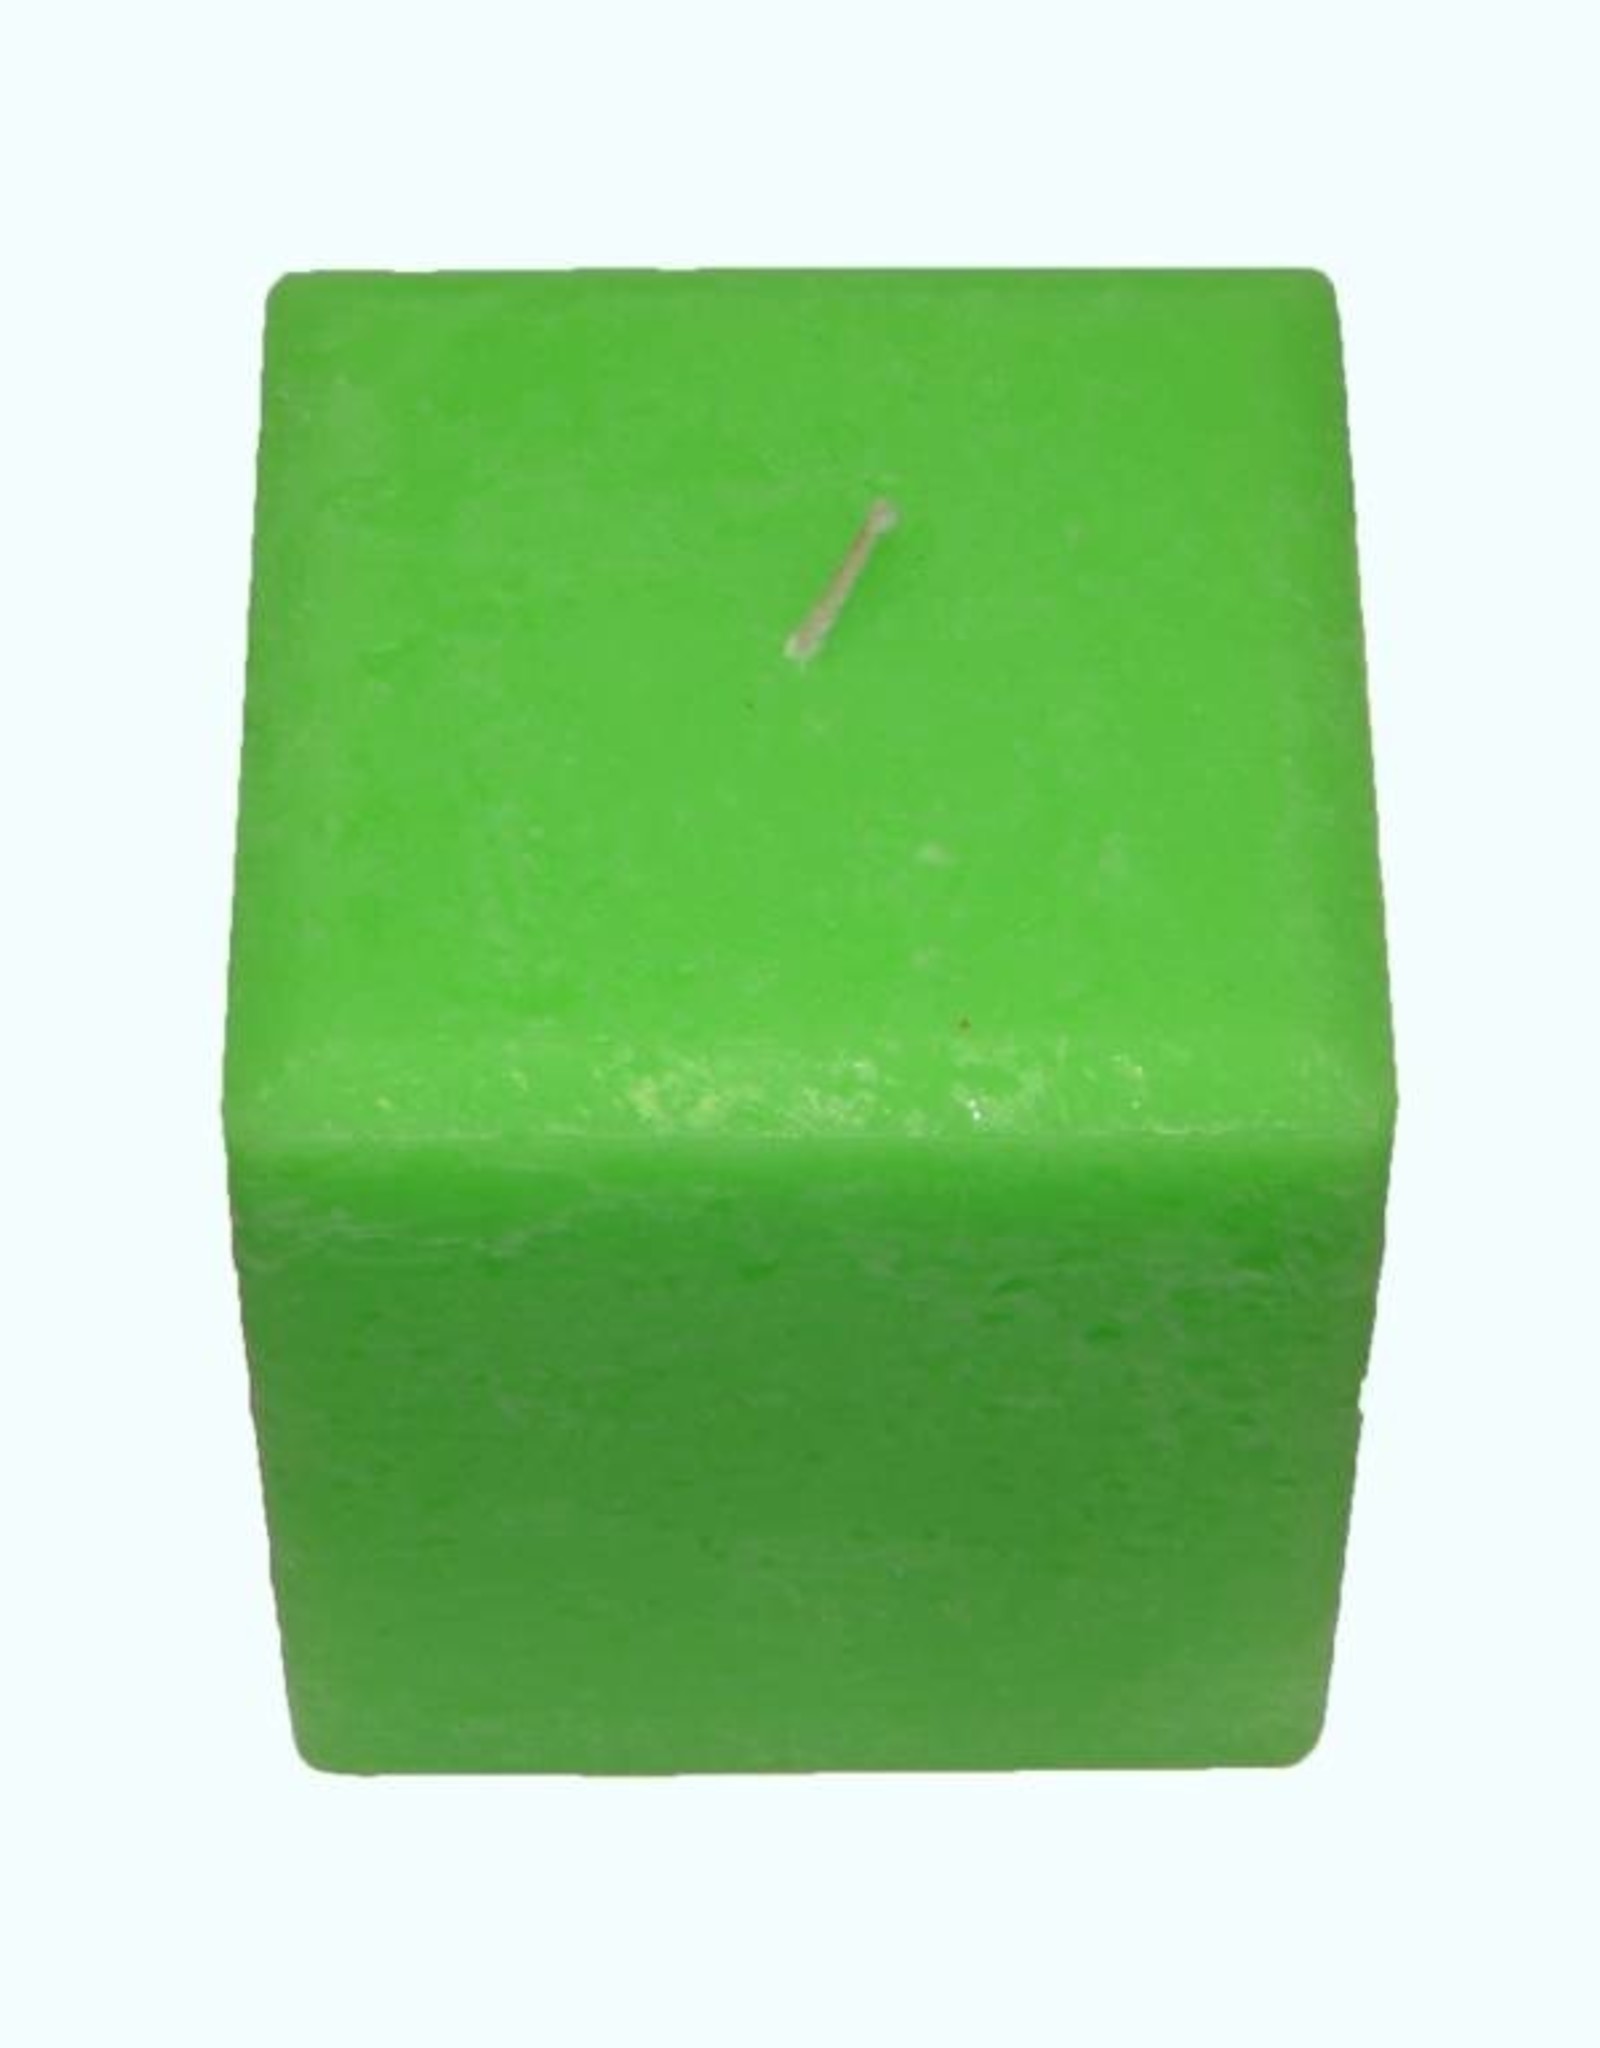 Grote vierkante kaars in de kleur Fluor Groen 10x10